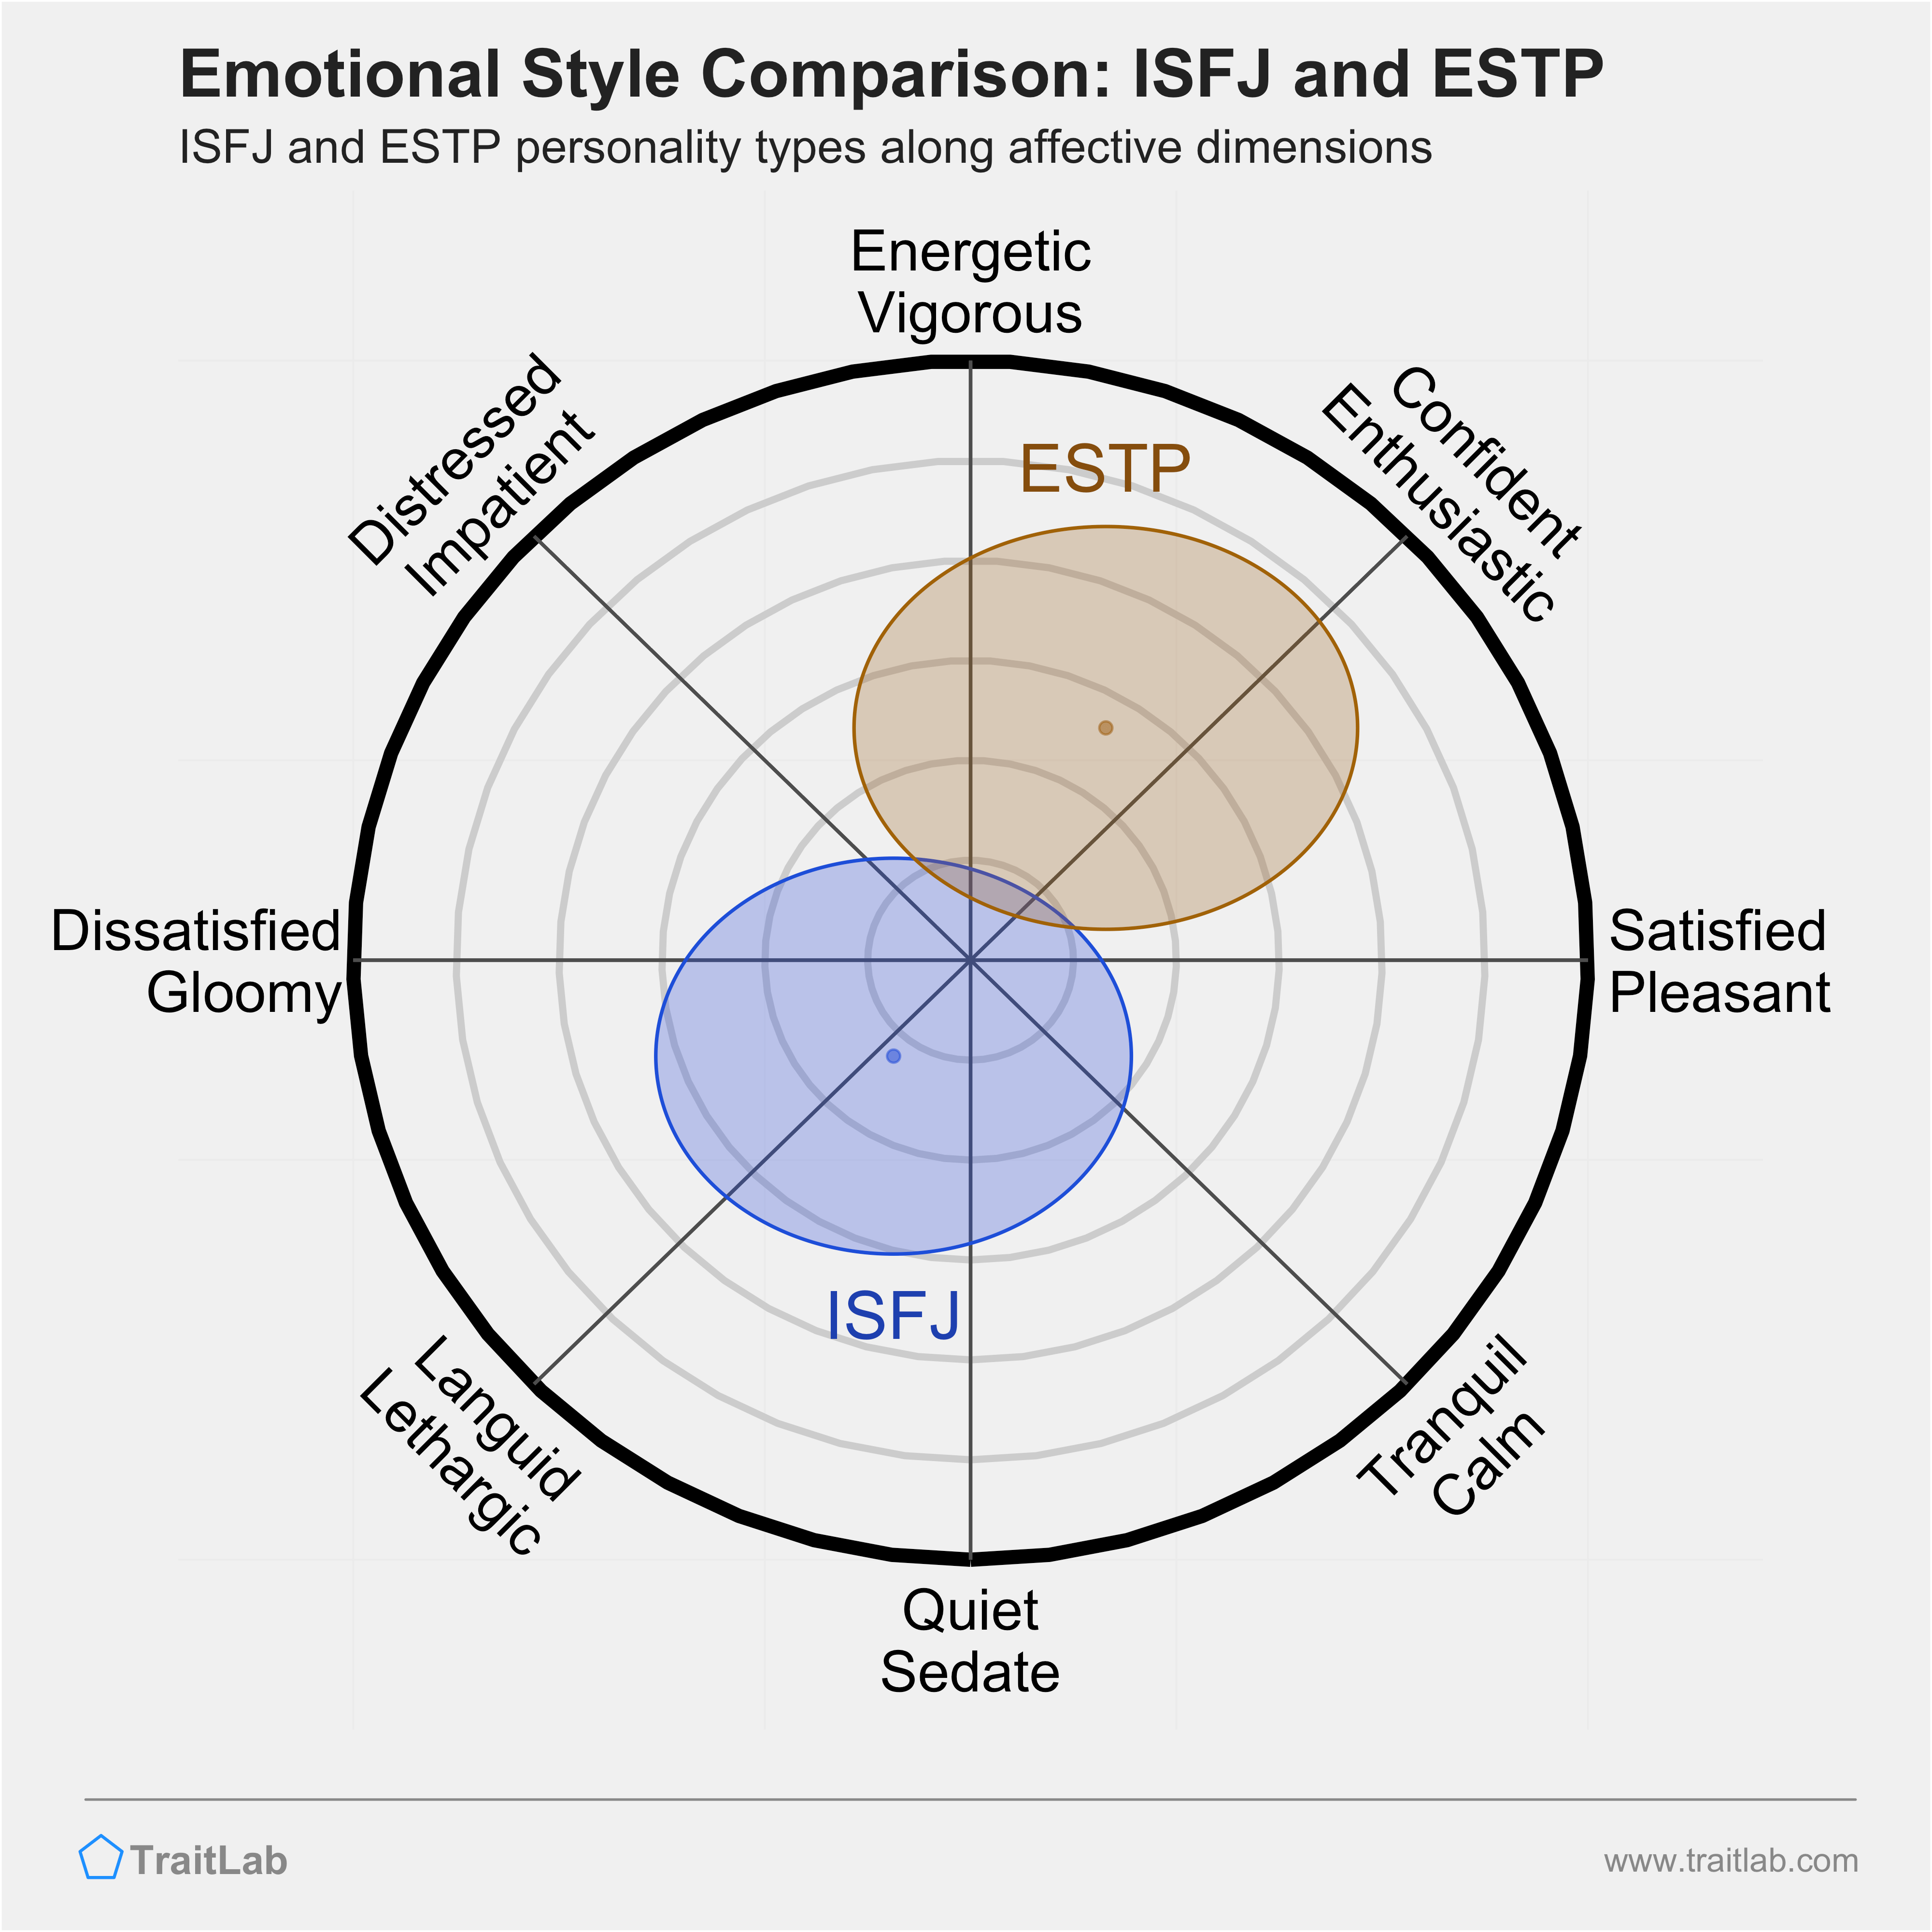 ISFJ and ESTP comparison across emotional (affective) dimensions